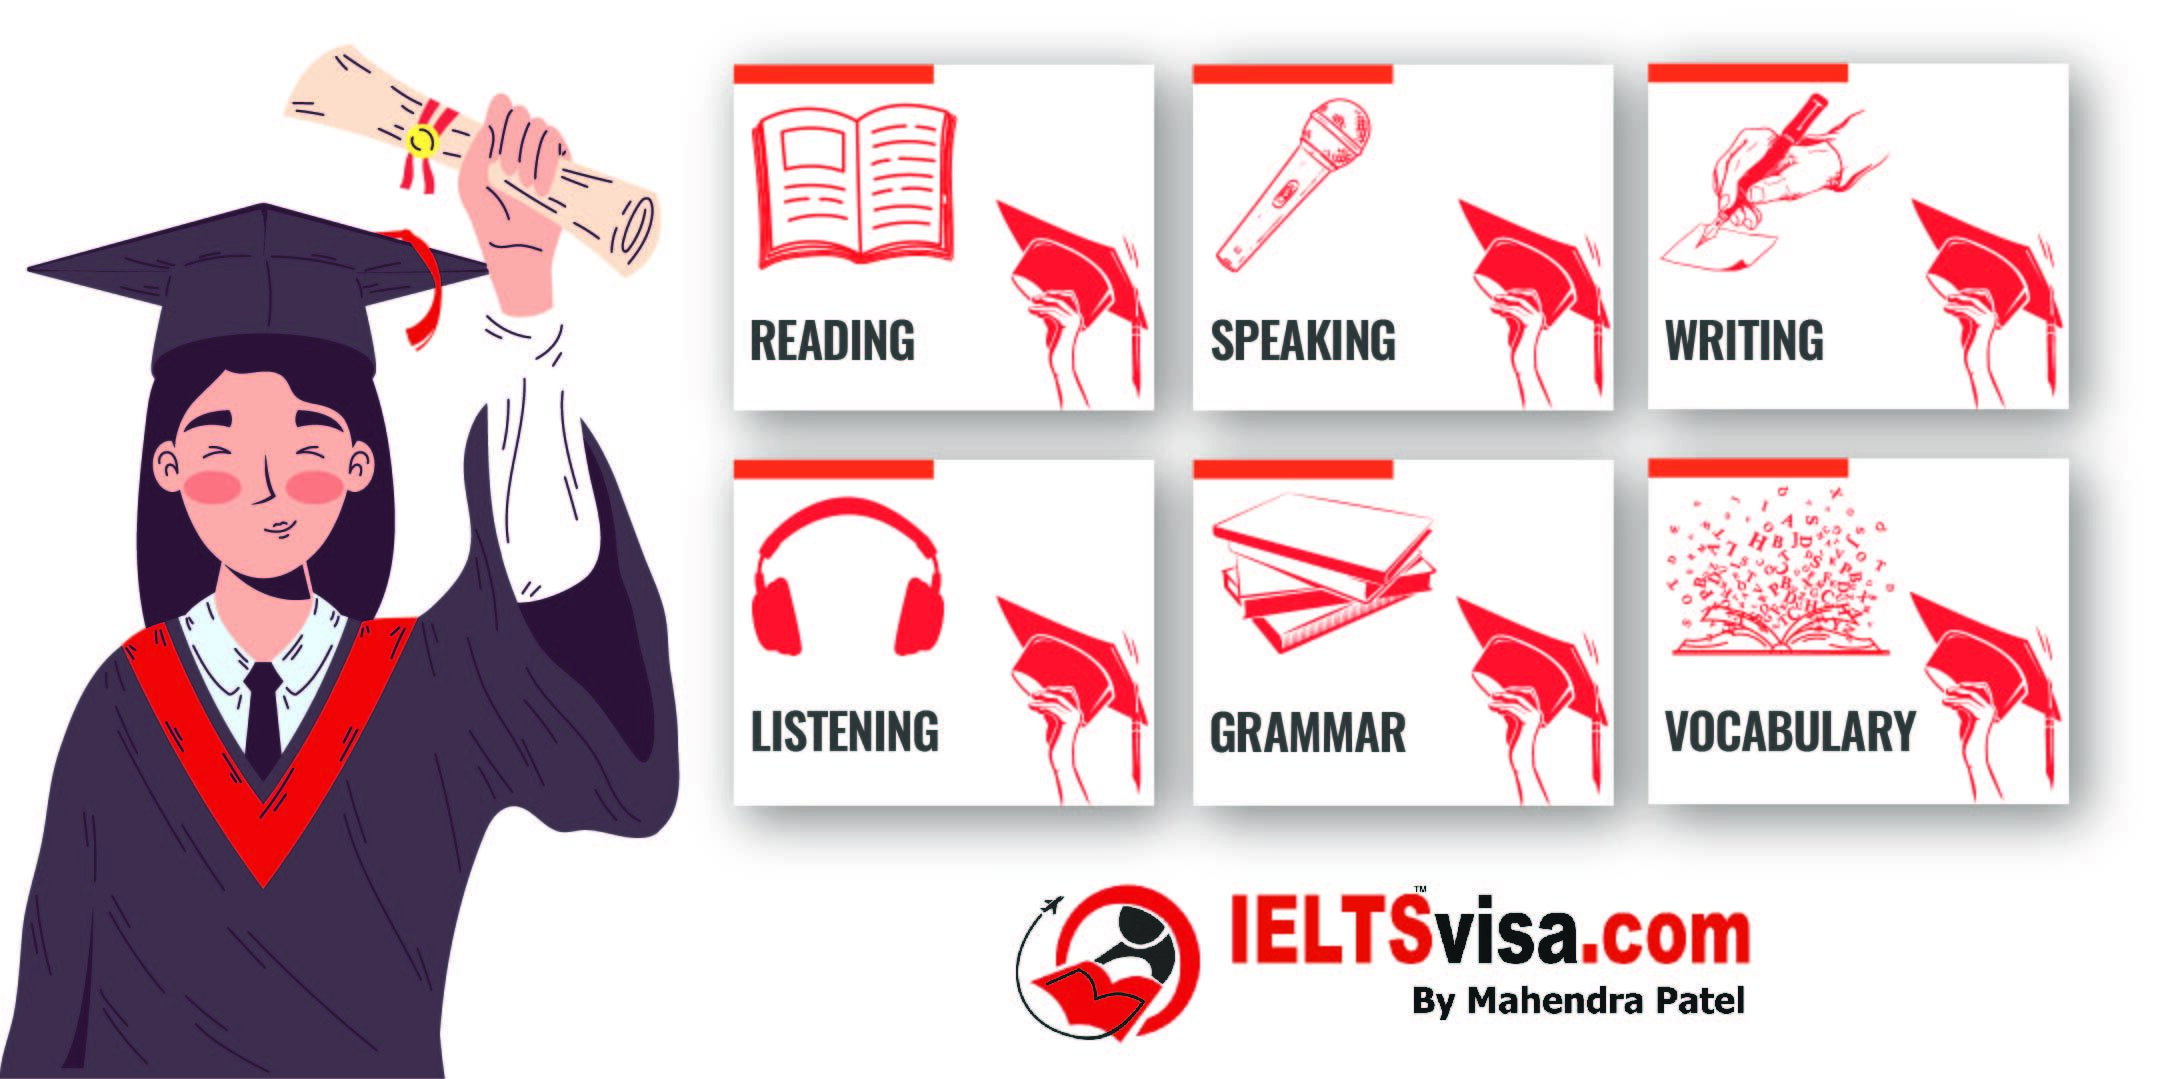 IELTSvisa.com reading speaking writing listening image